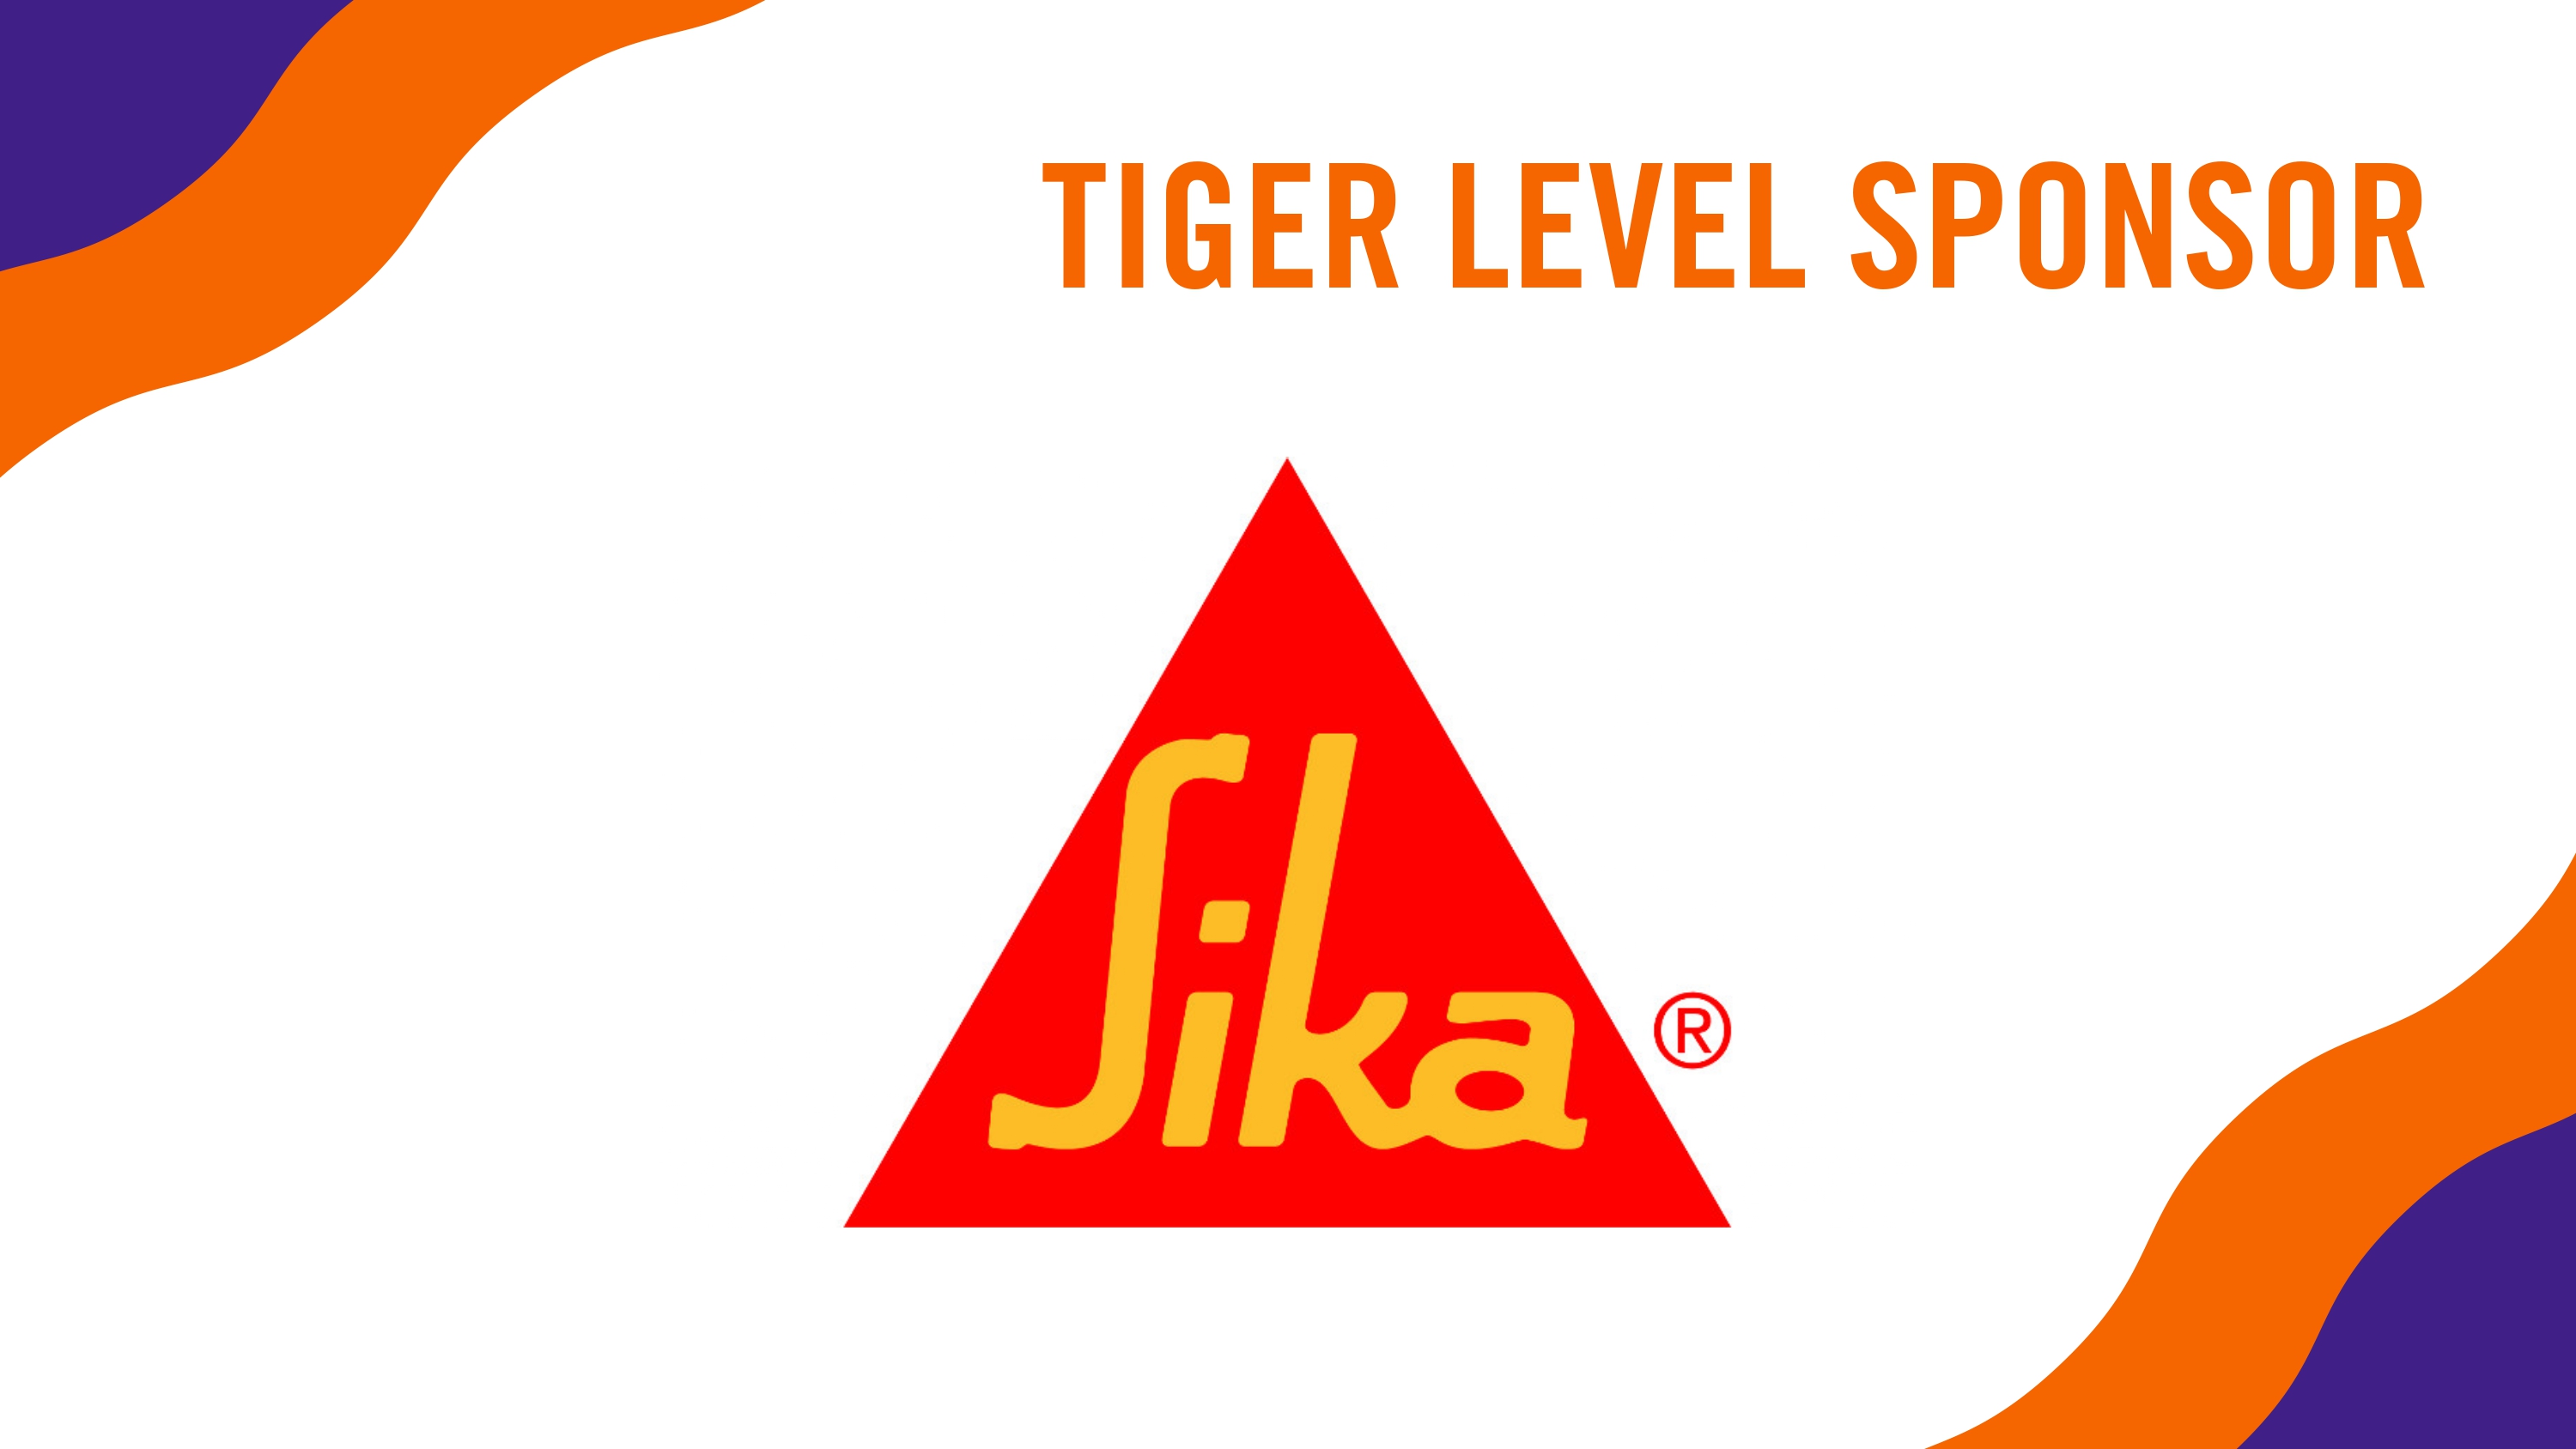 Tiger level logos